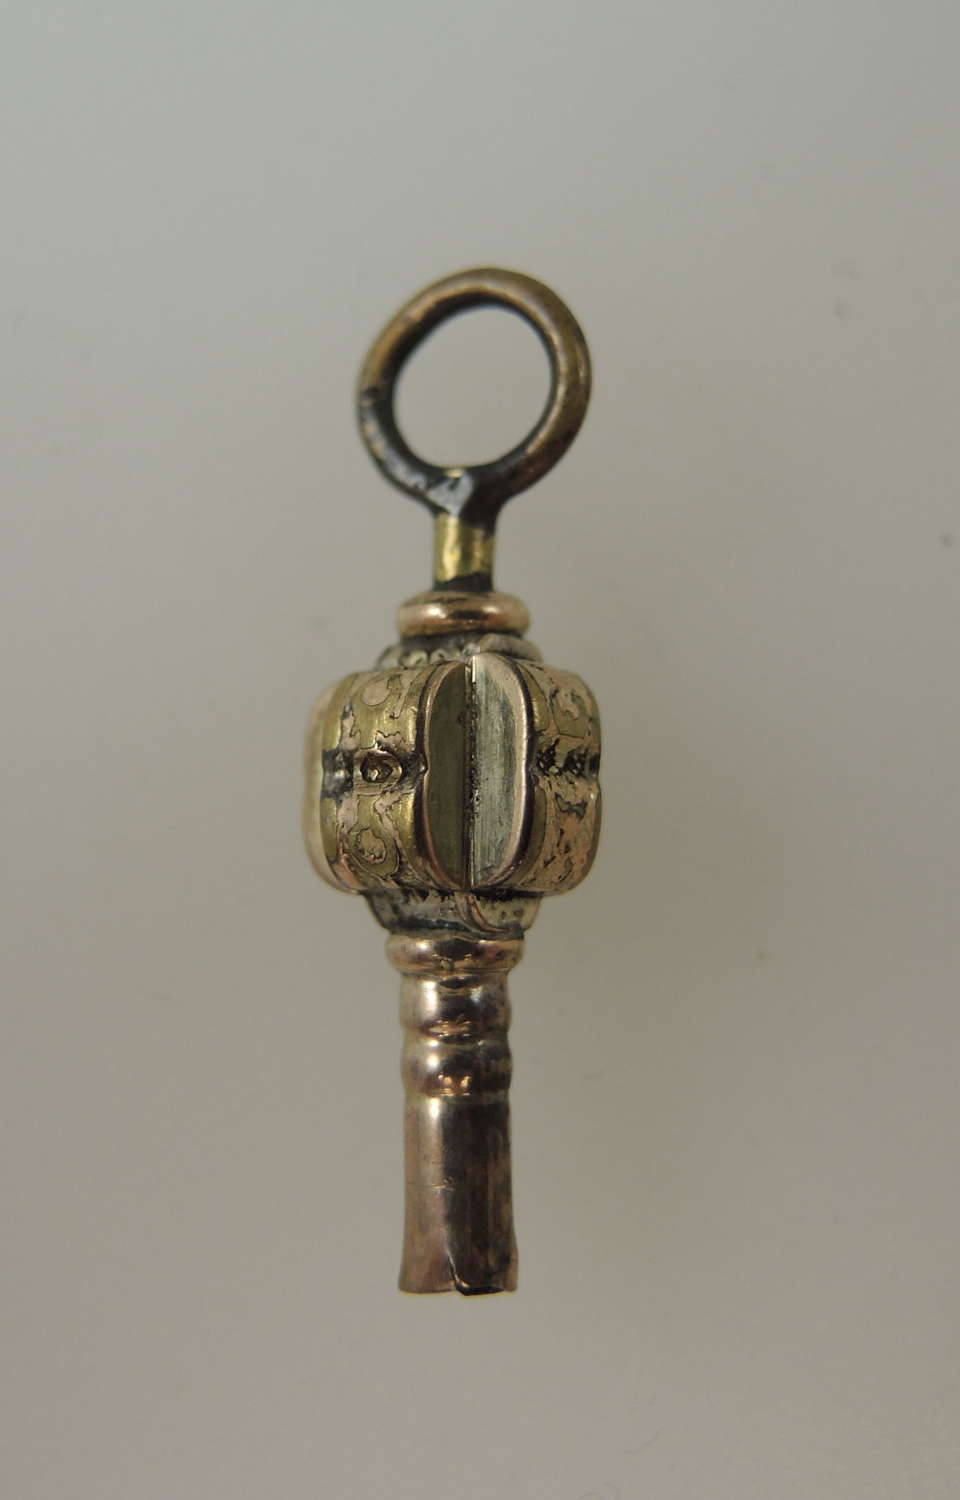 Antique gilt pocket watch key c1850